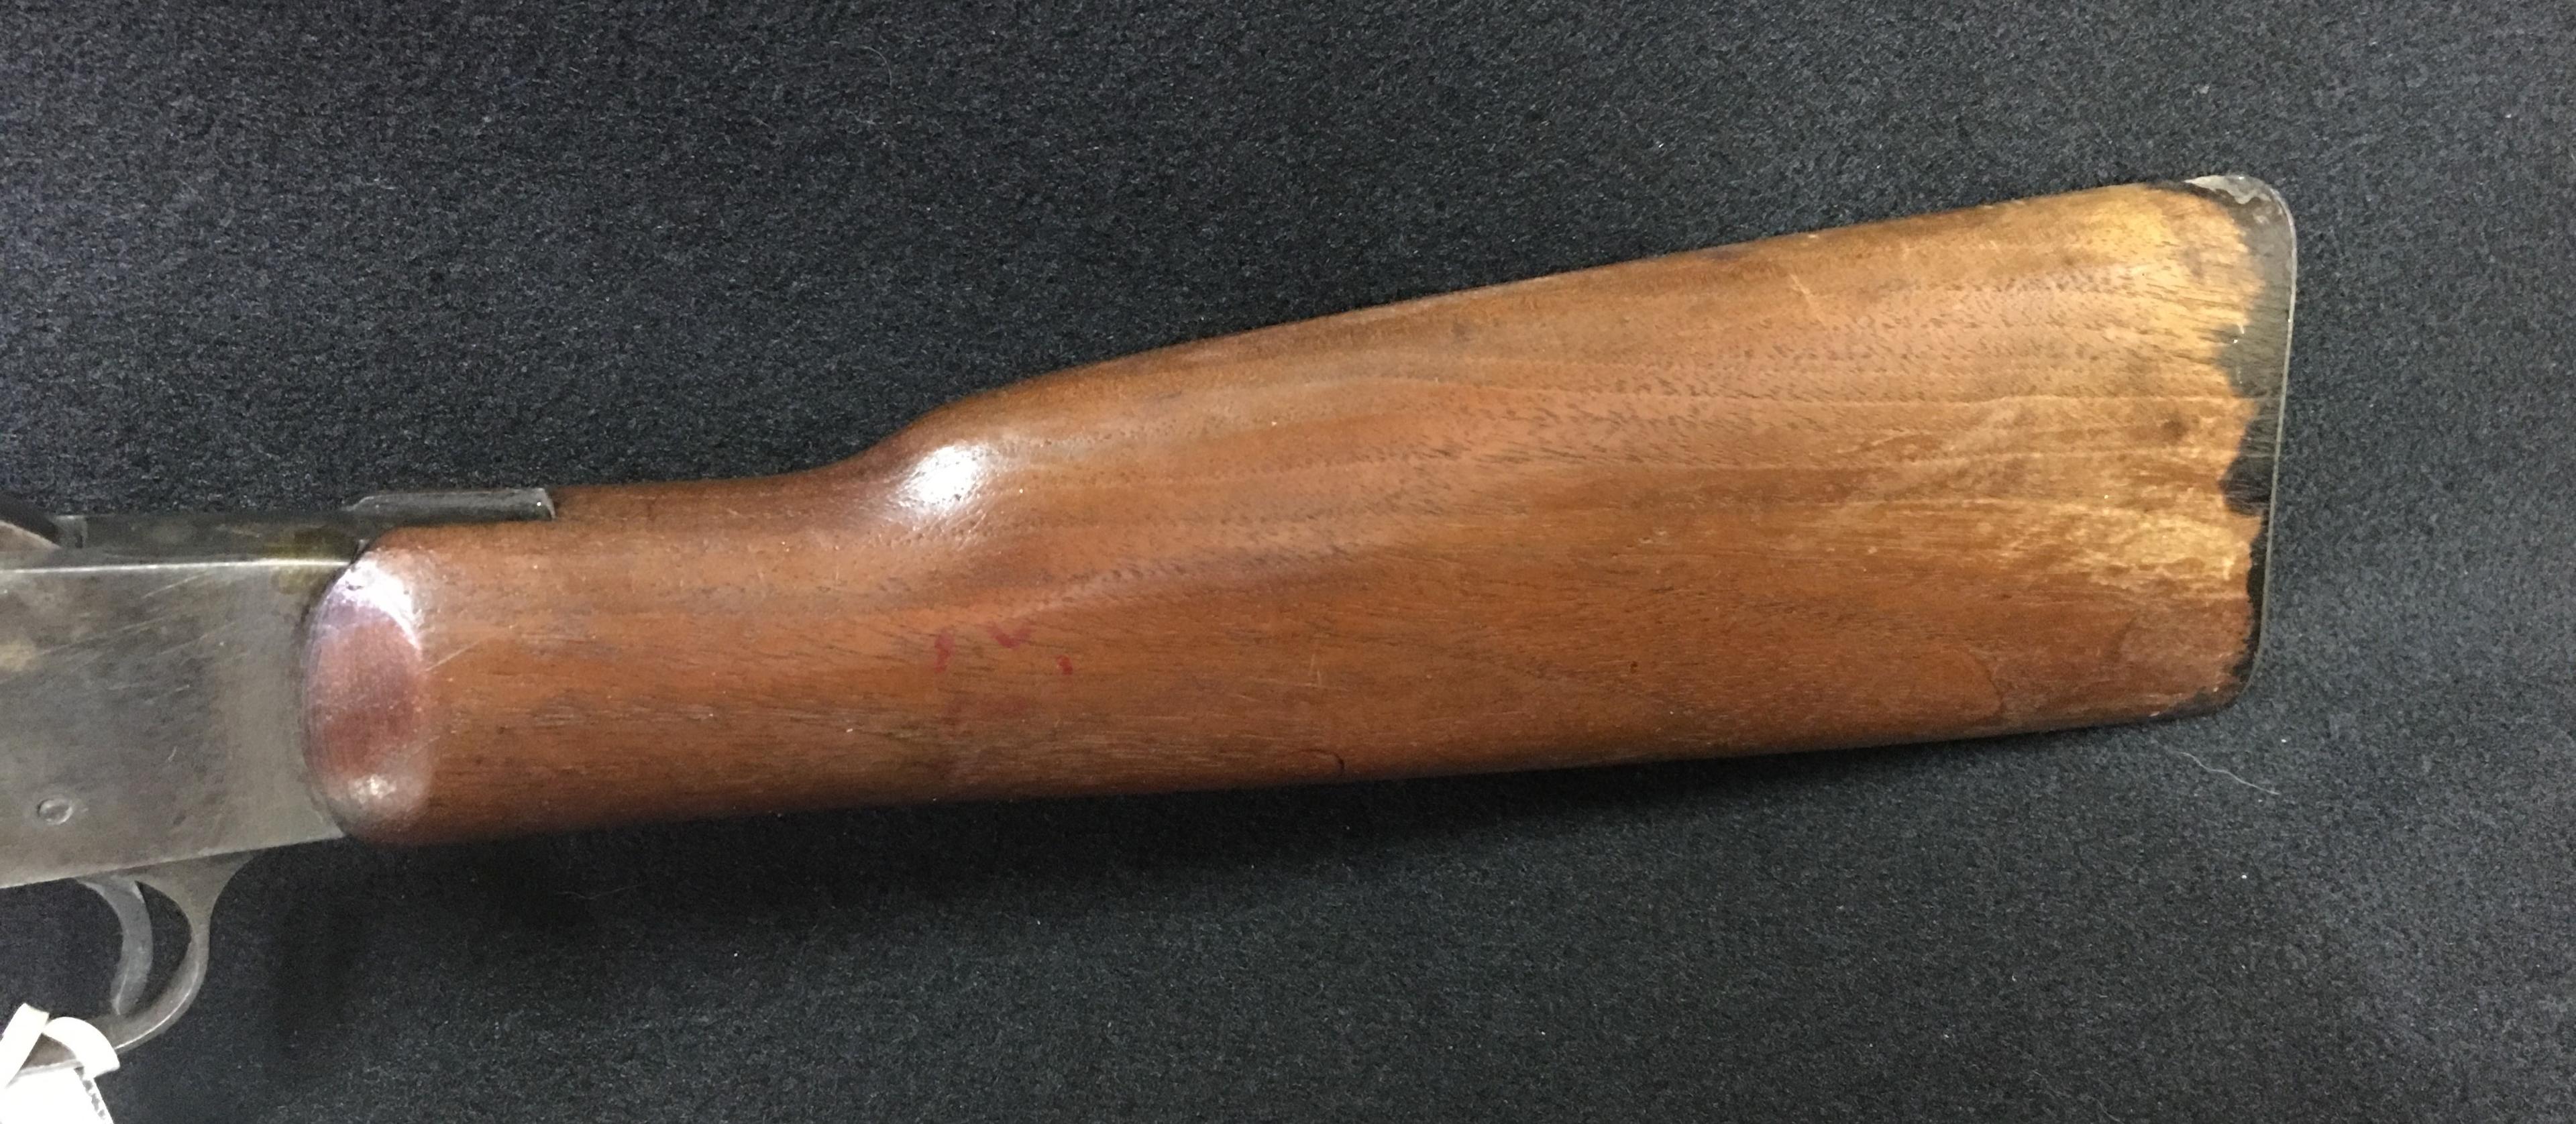 Remington Model 6 .22 Short Long or Long Rifle